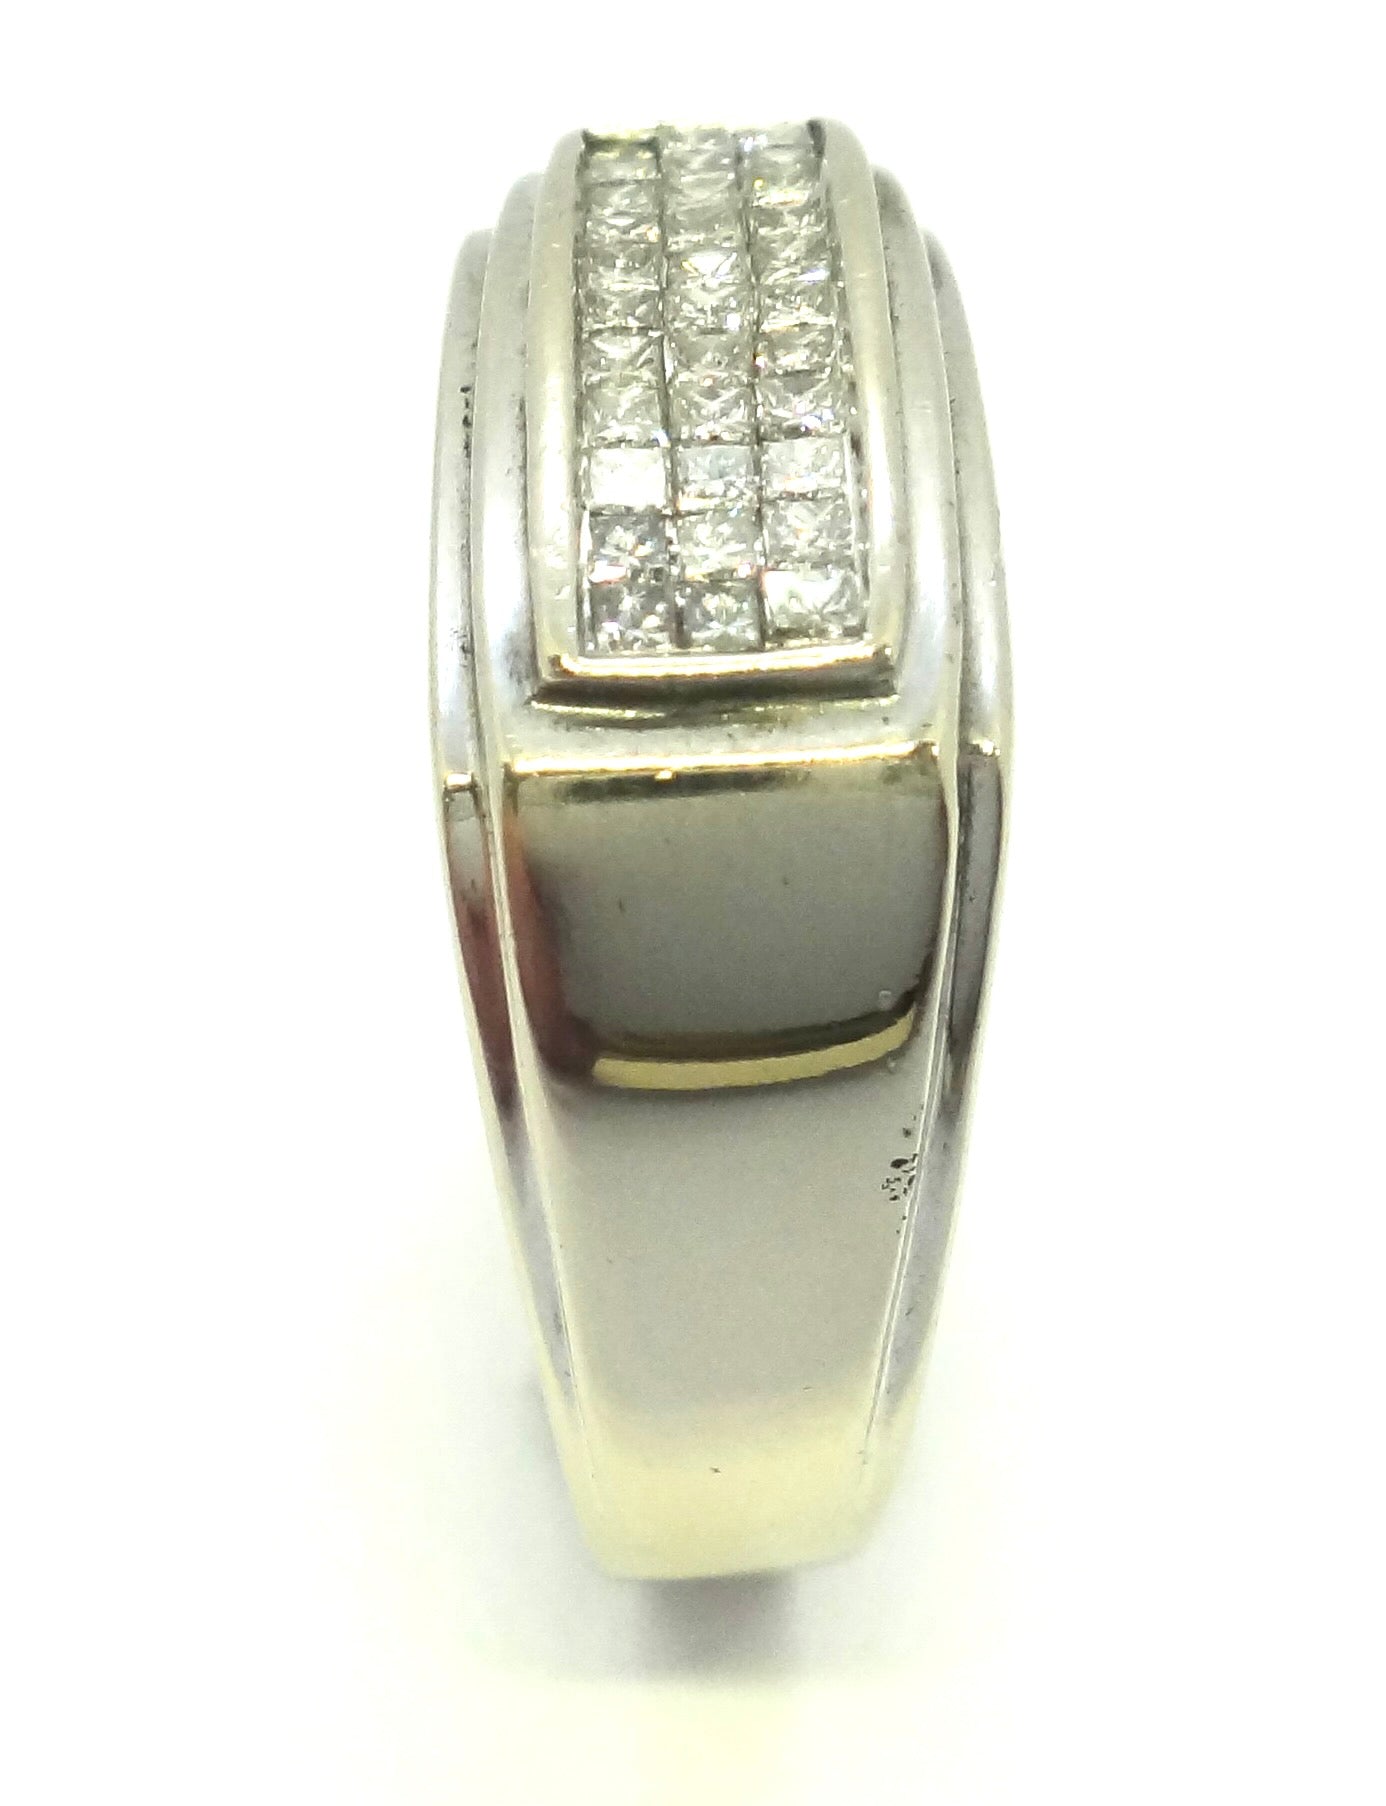 Mens 14ct White GOLD & Princess Cut Diamond Ring VAL $3,300